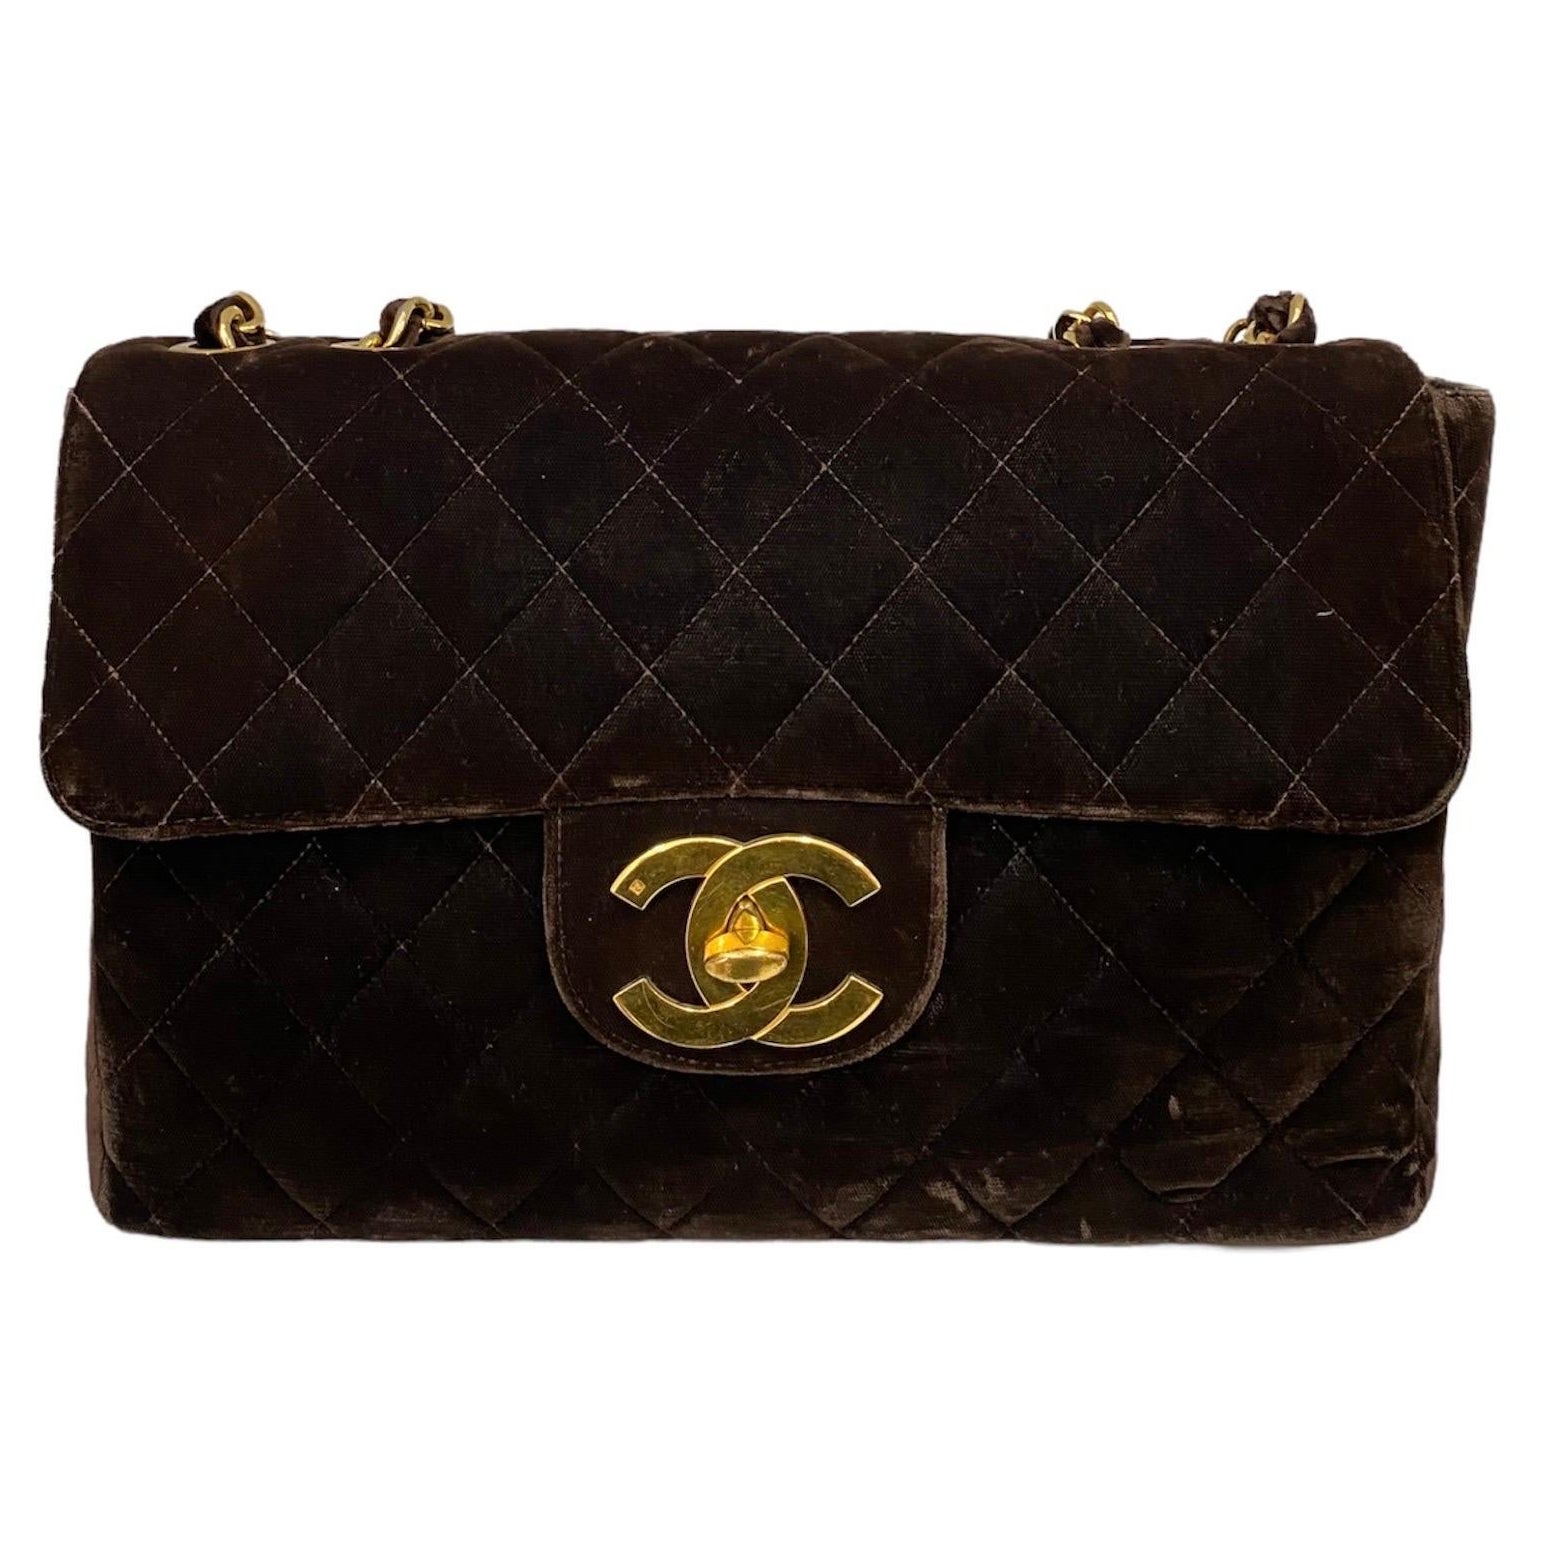 Chanel Big Bags - 27 For Sale on 1stDibs